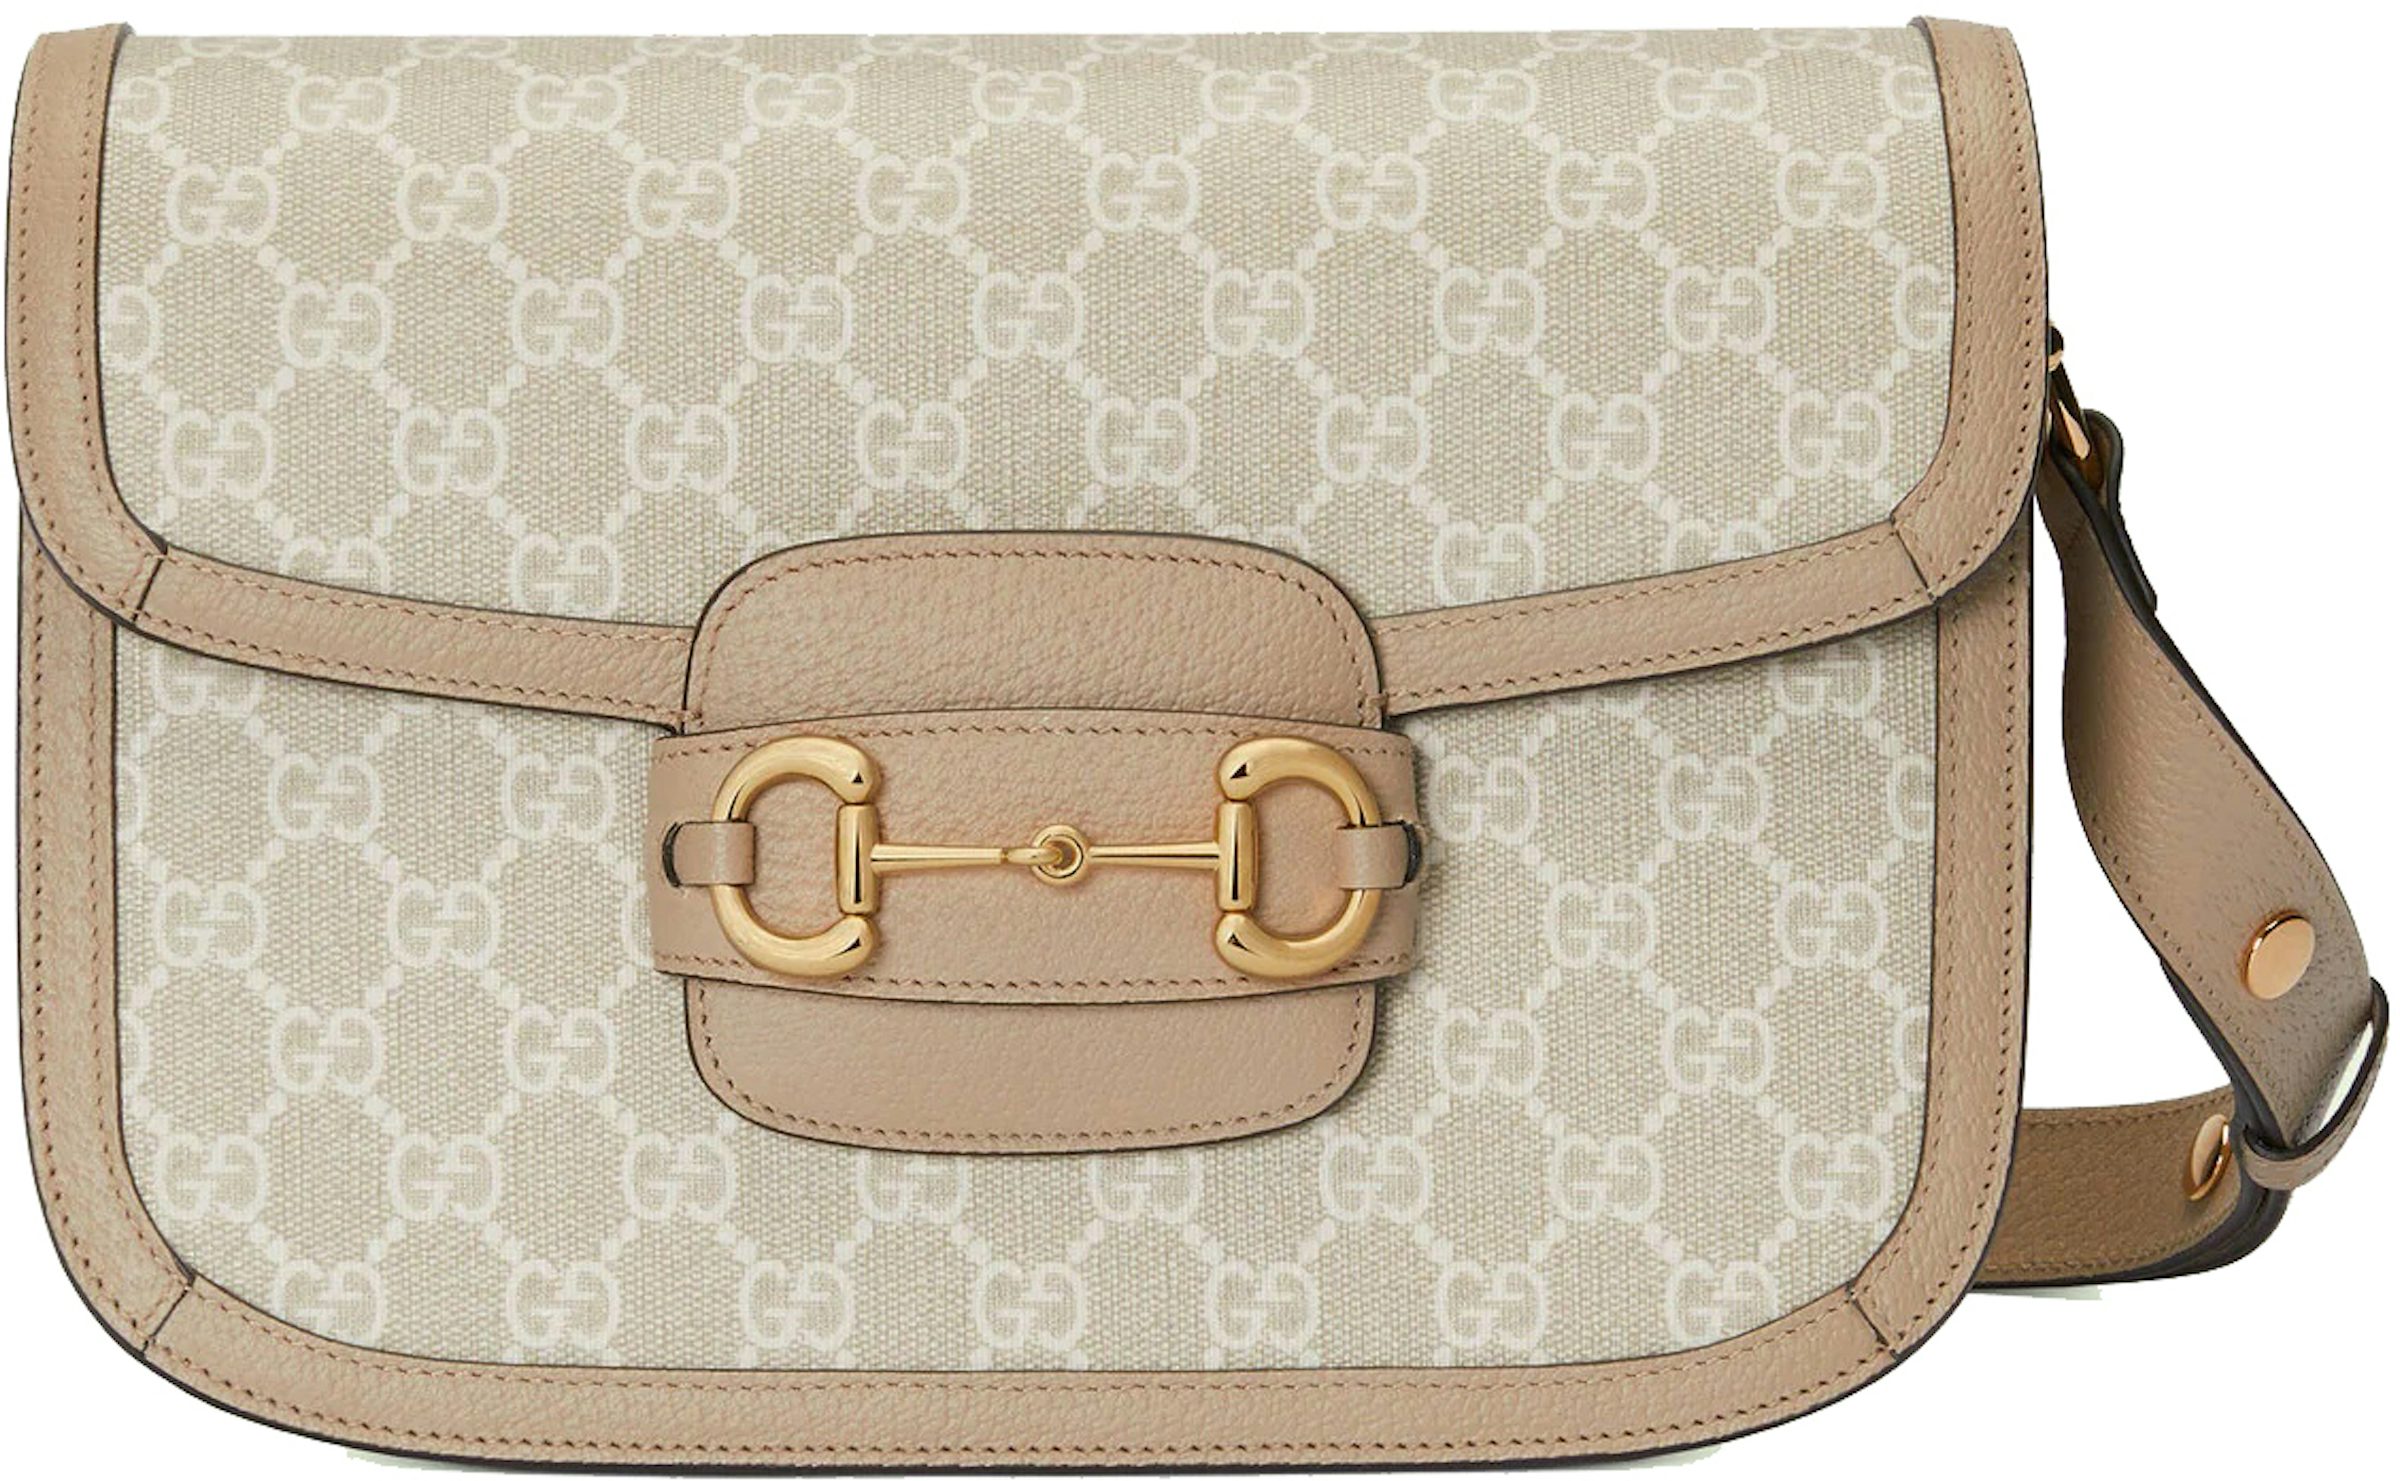 Gucci Horsebit Chain medium shoulder bag in beige and ebony GG canvas